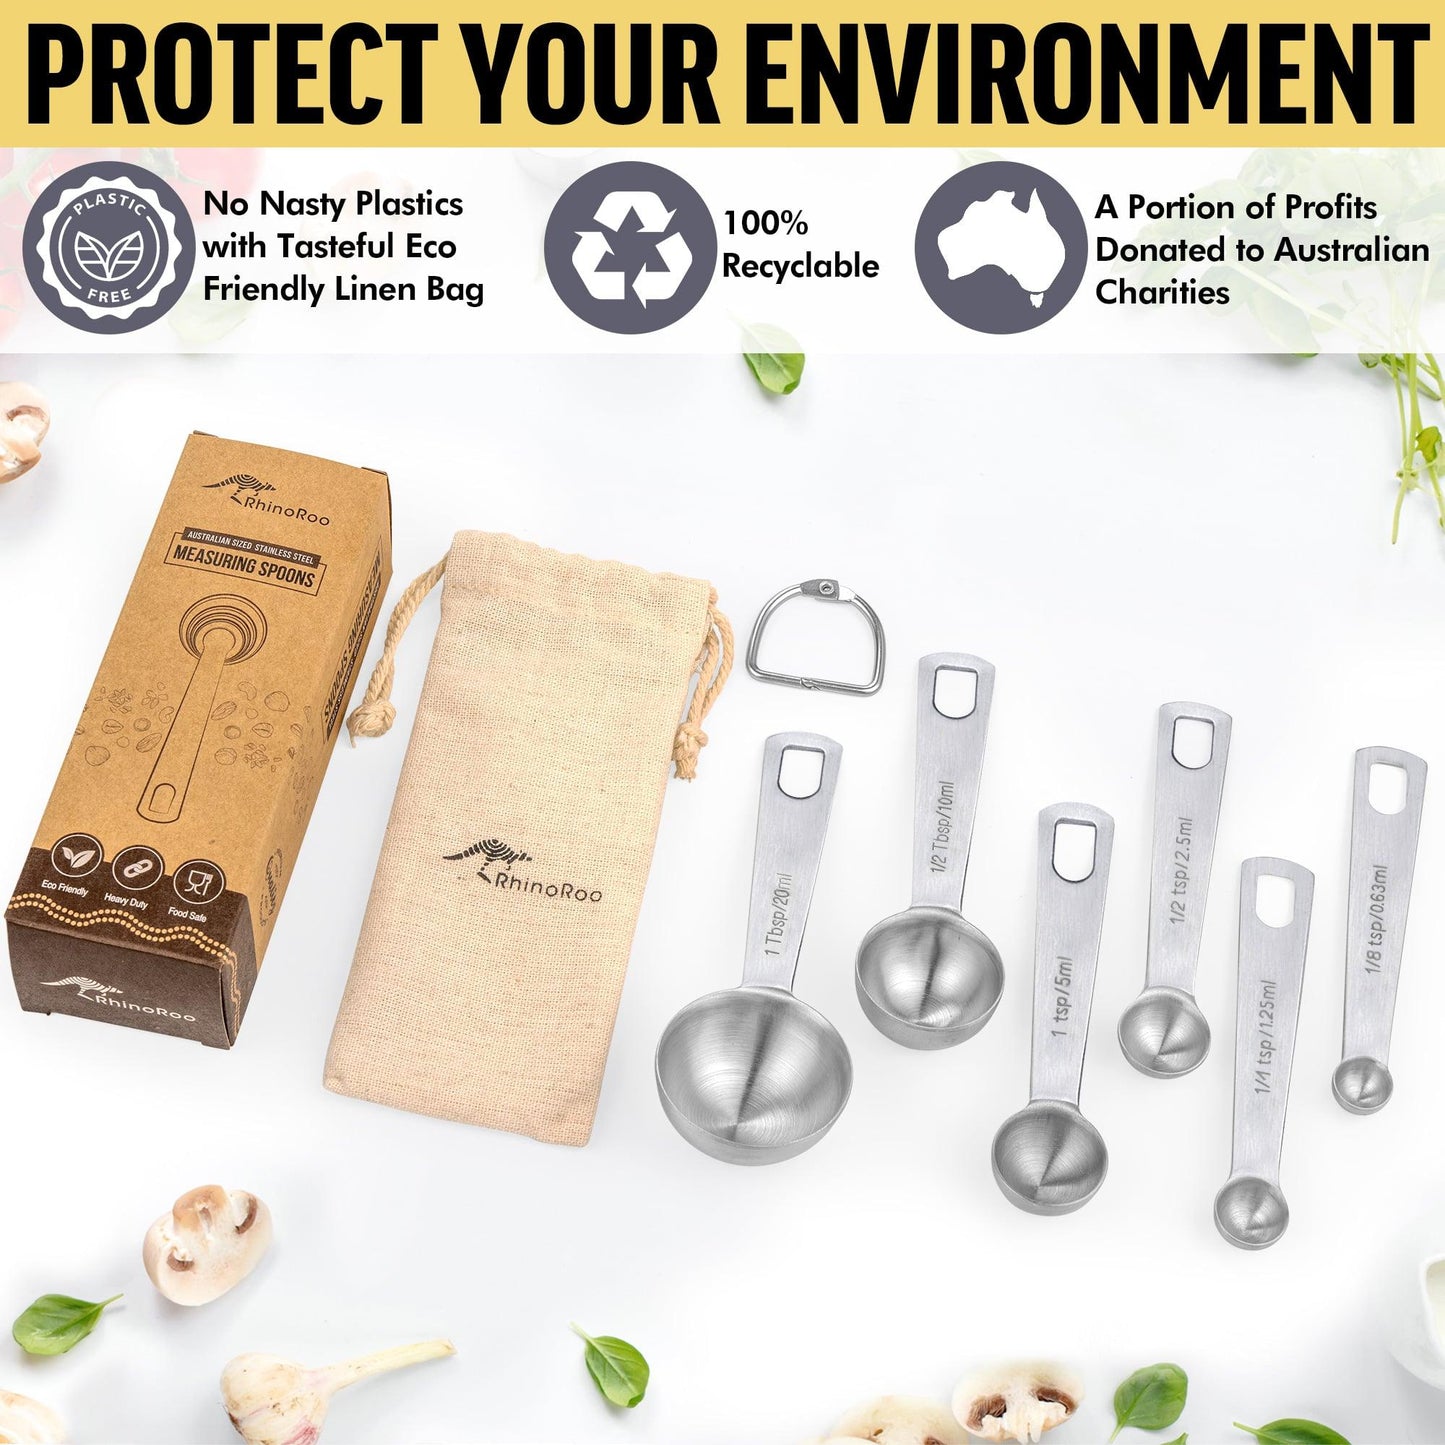 Australian Standard 20ml Tablespoon to 1/8 Teaspoon Stainless Steel Measuring Spoons Set - RhinoRoo